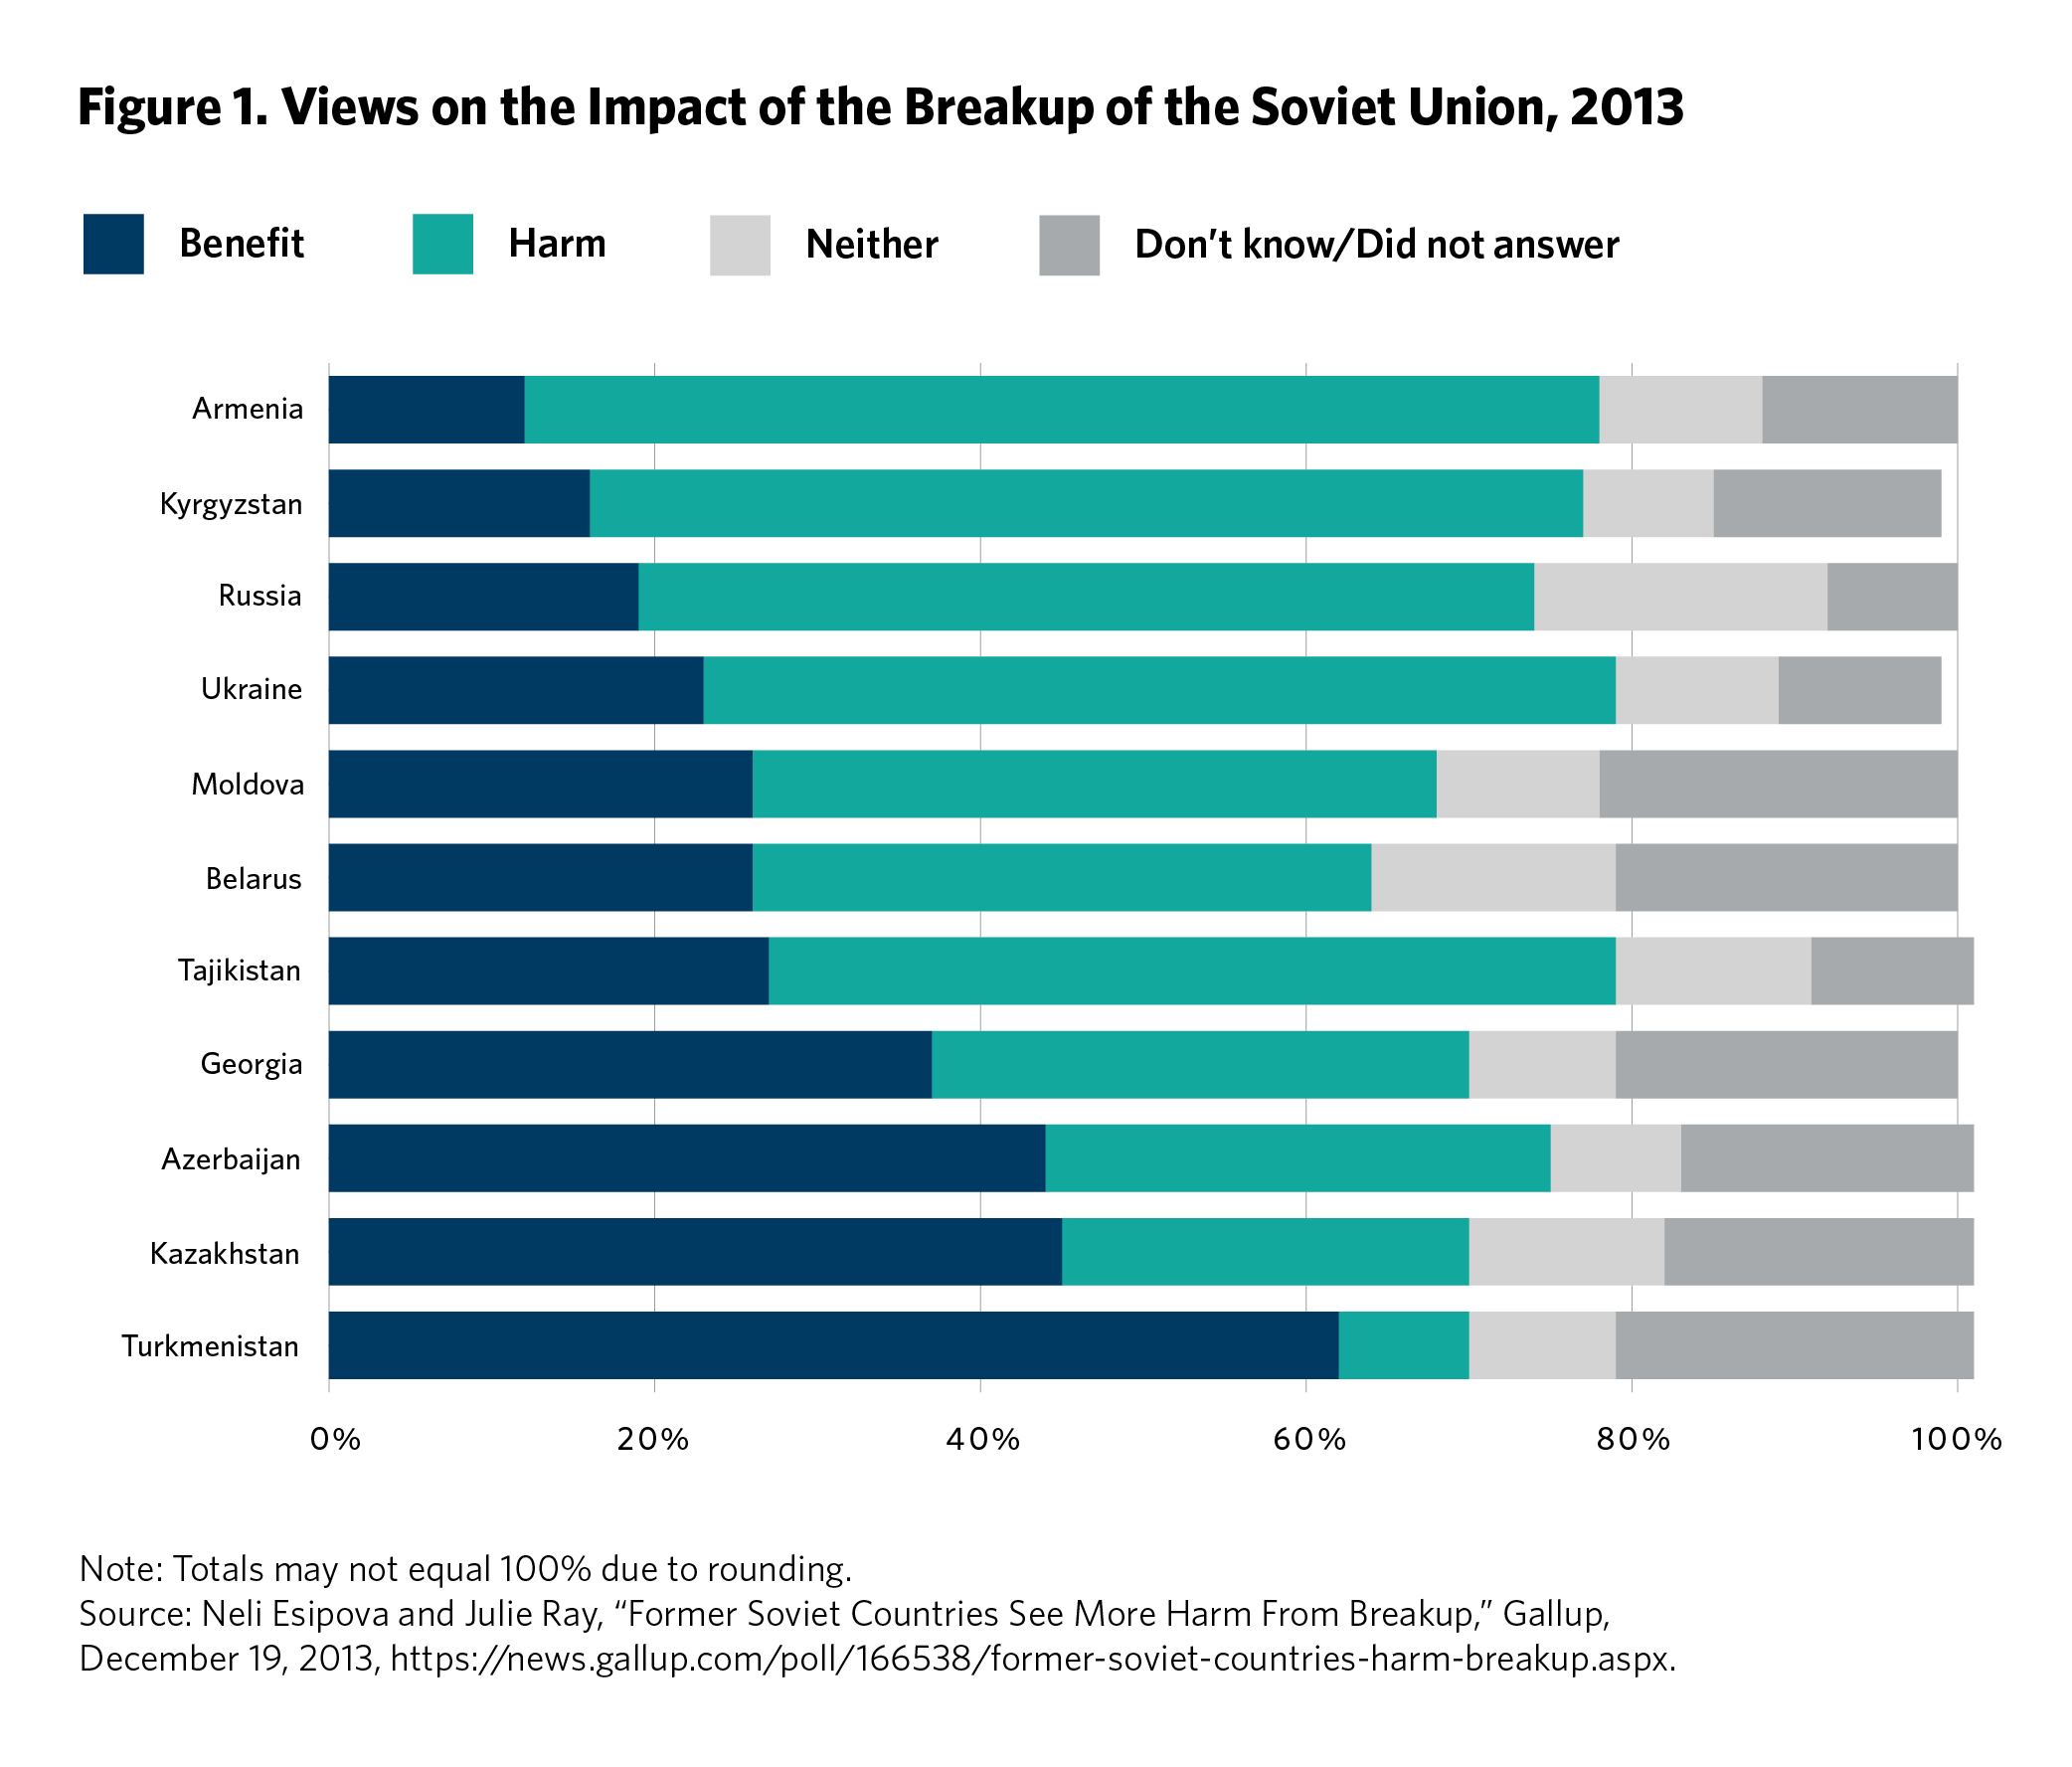 views of impact of Soviet Union breakup